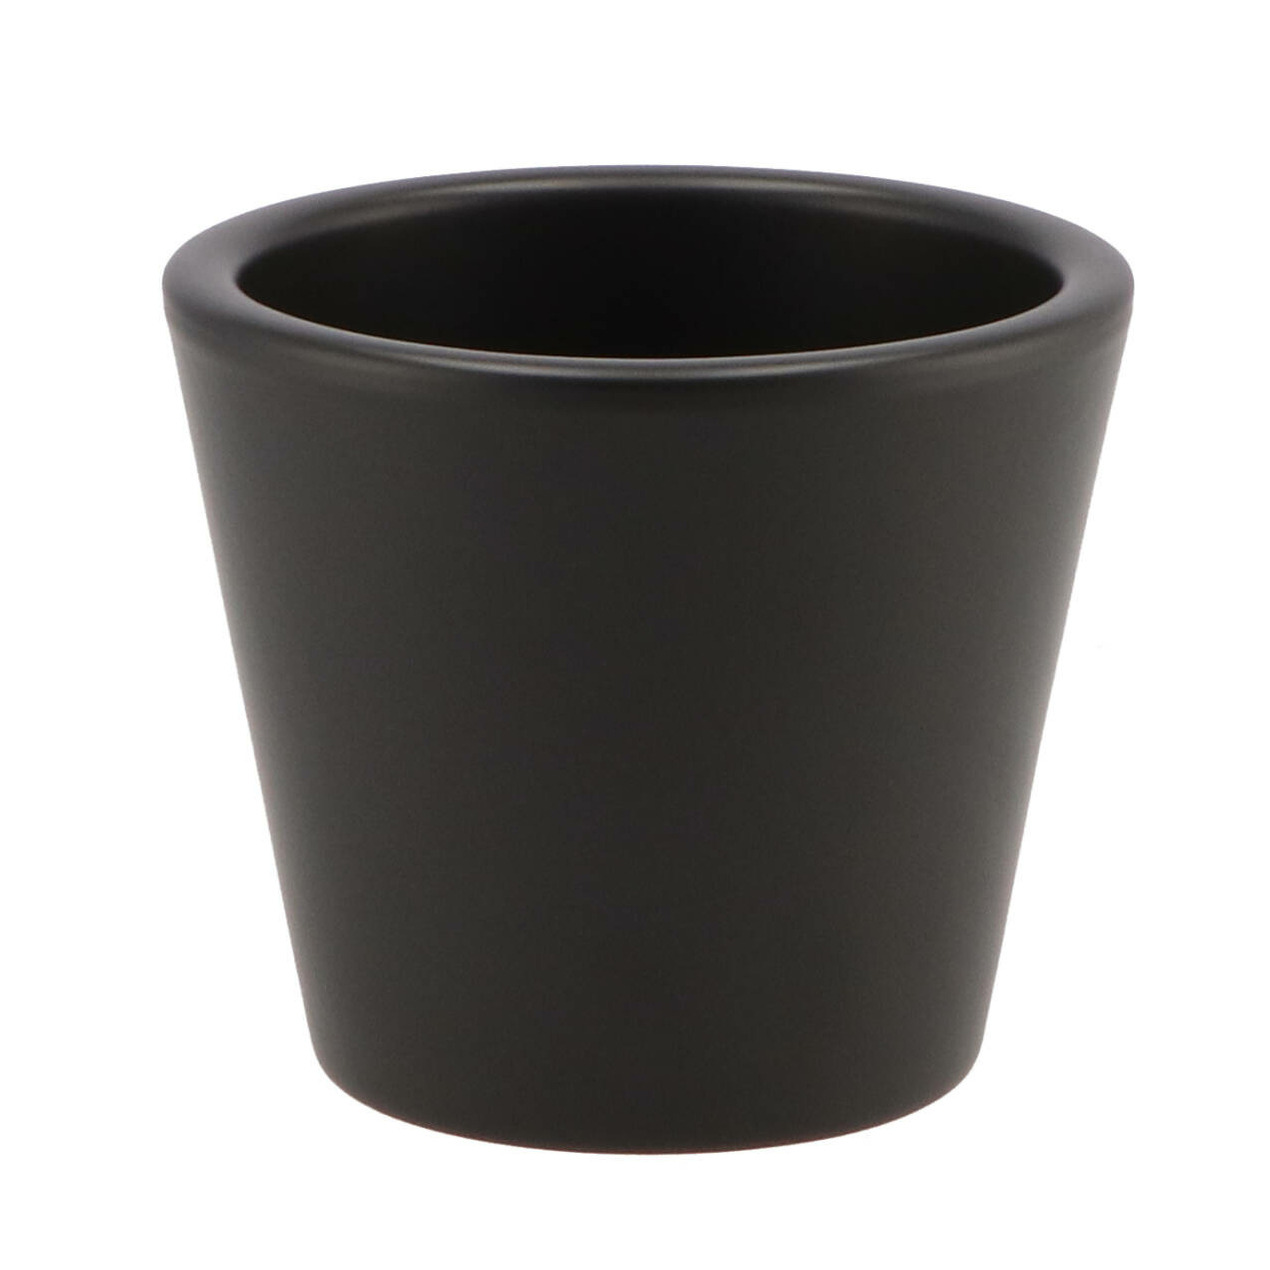 DK Design  bloempot/plantenpot - Vinci - zwart mat - voor kamerplant - D10 x H12 cm -